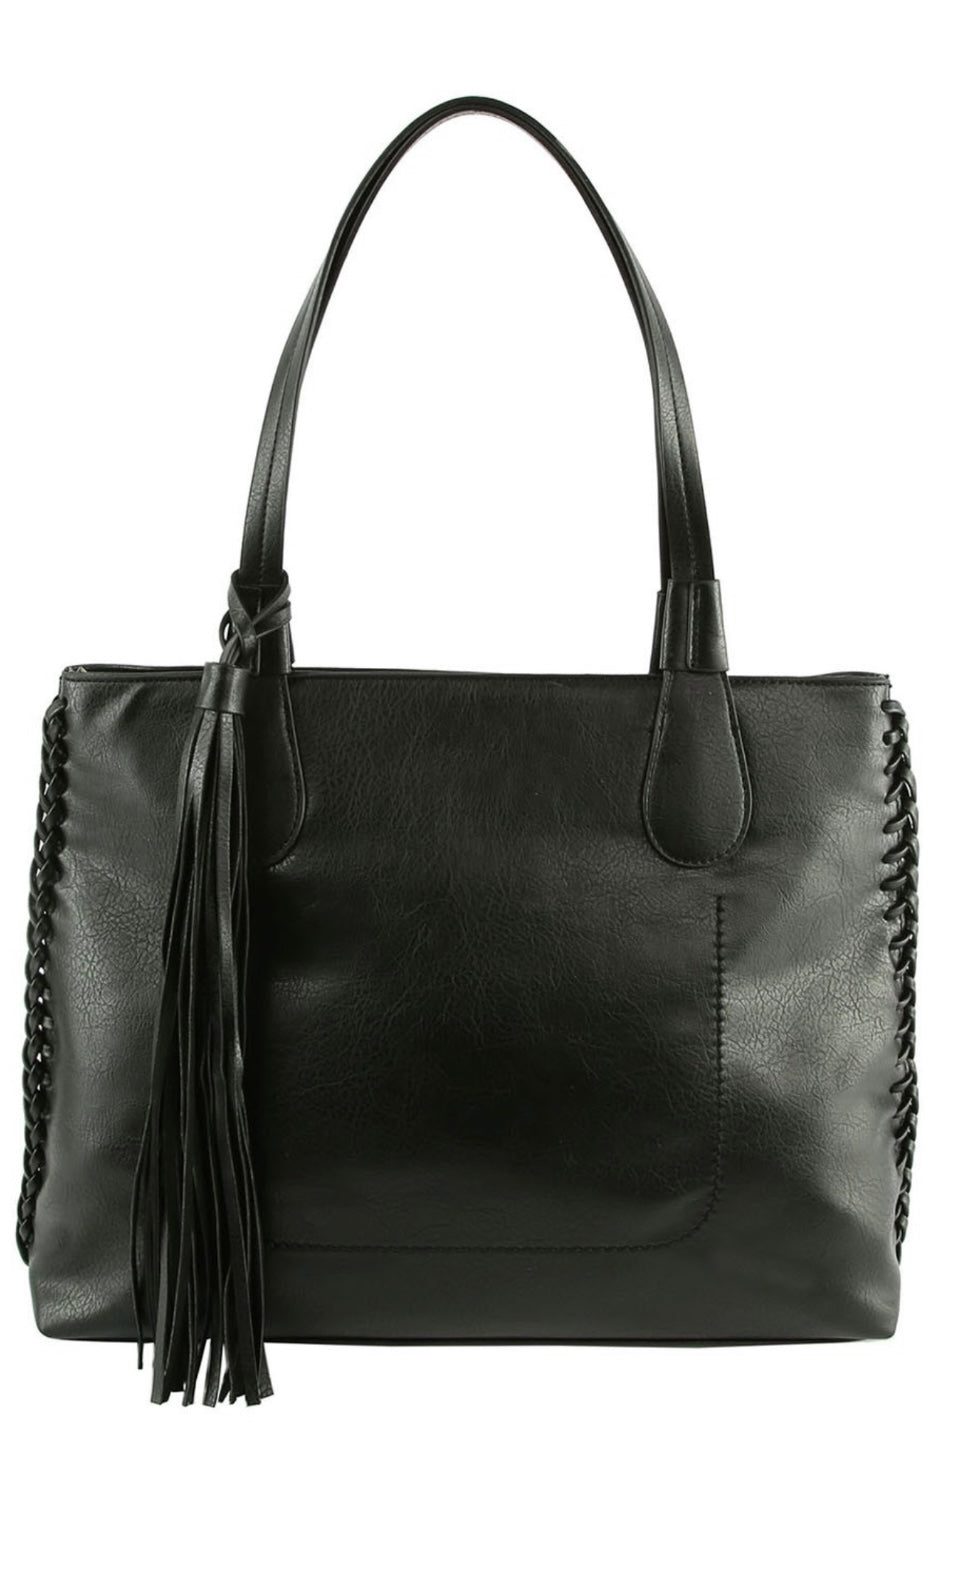 Bryan Black Vegan Leather Tassel Tote Handbag